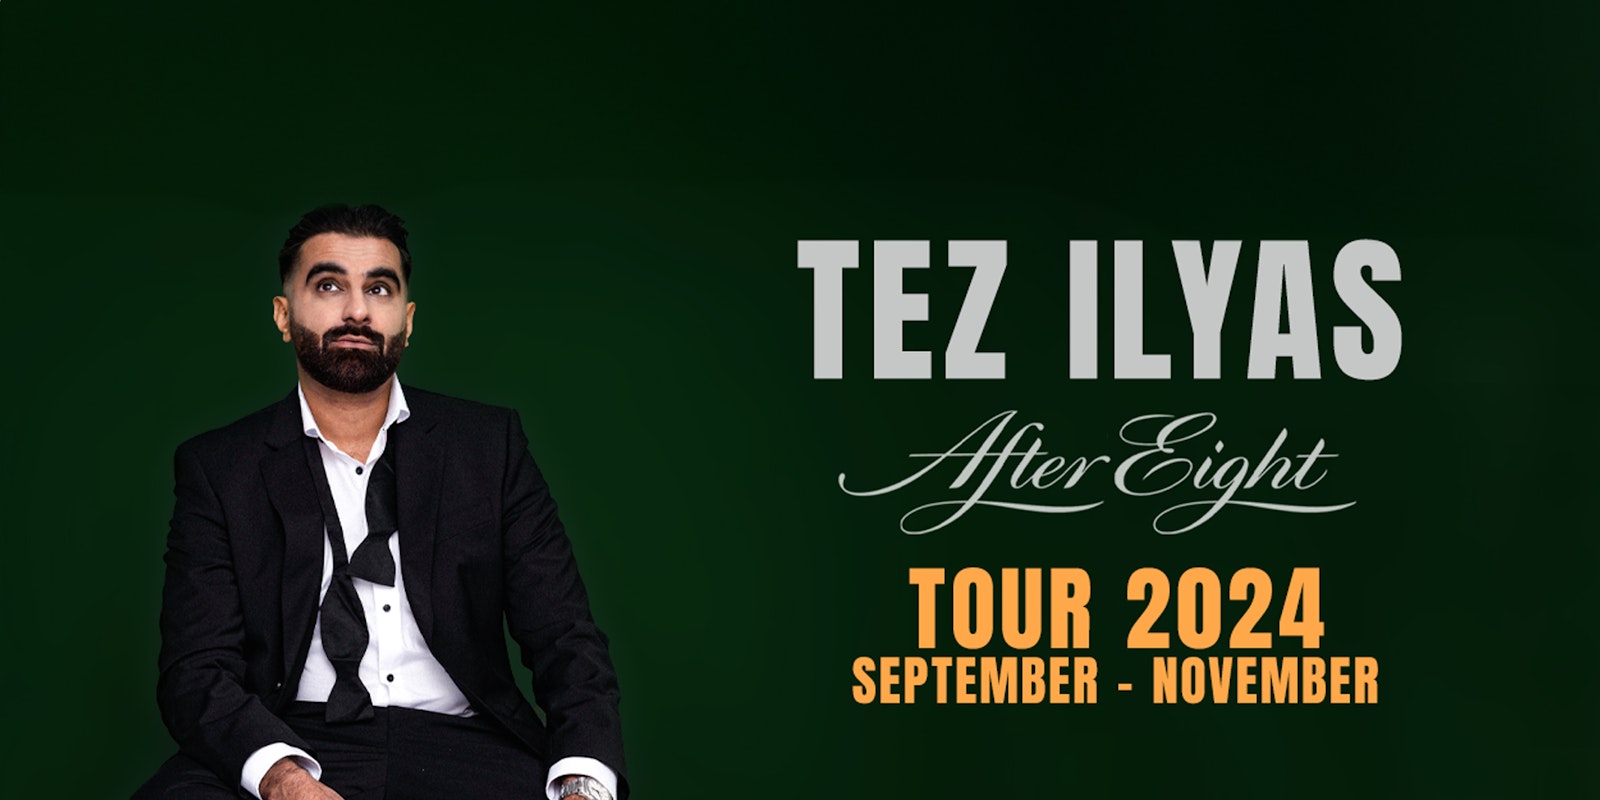 Tez Ilyas : After Eight – Birmingham